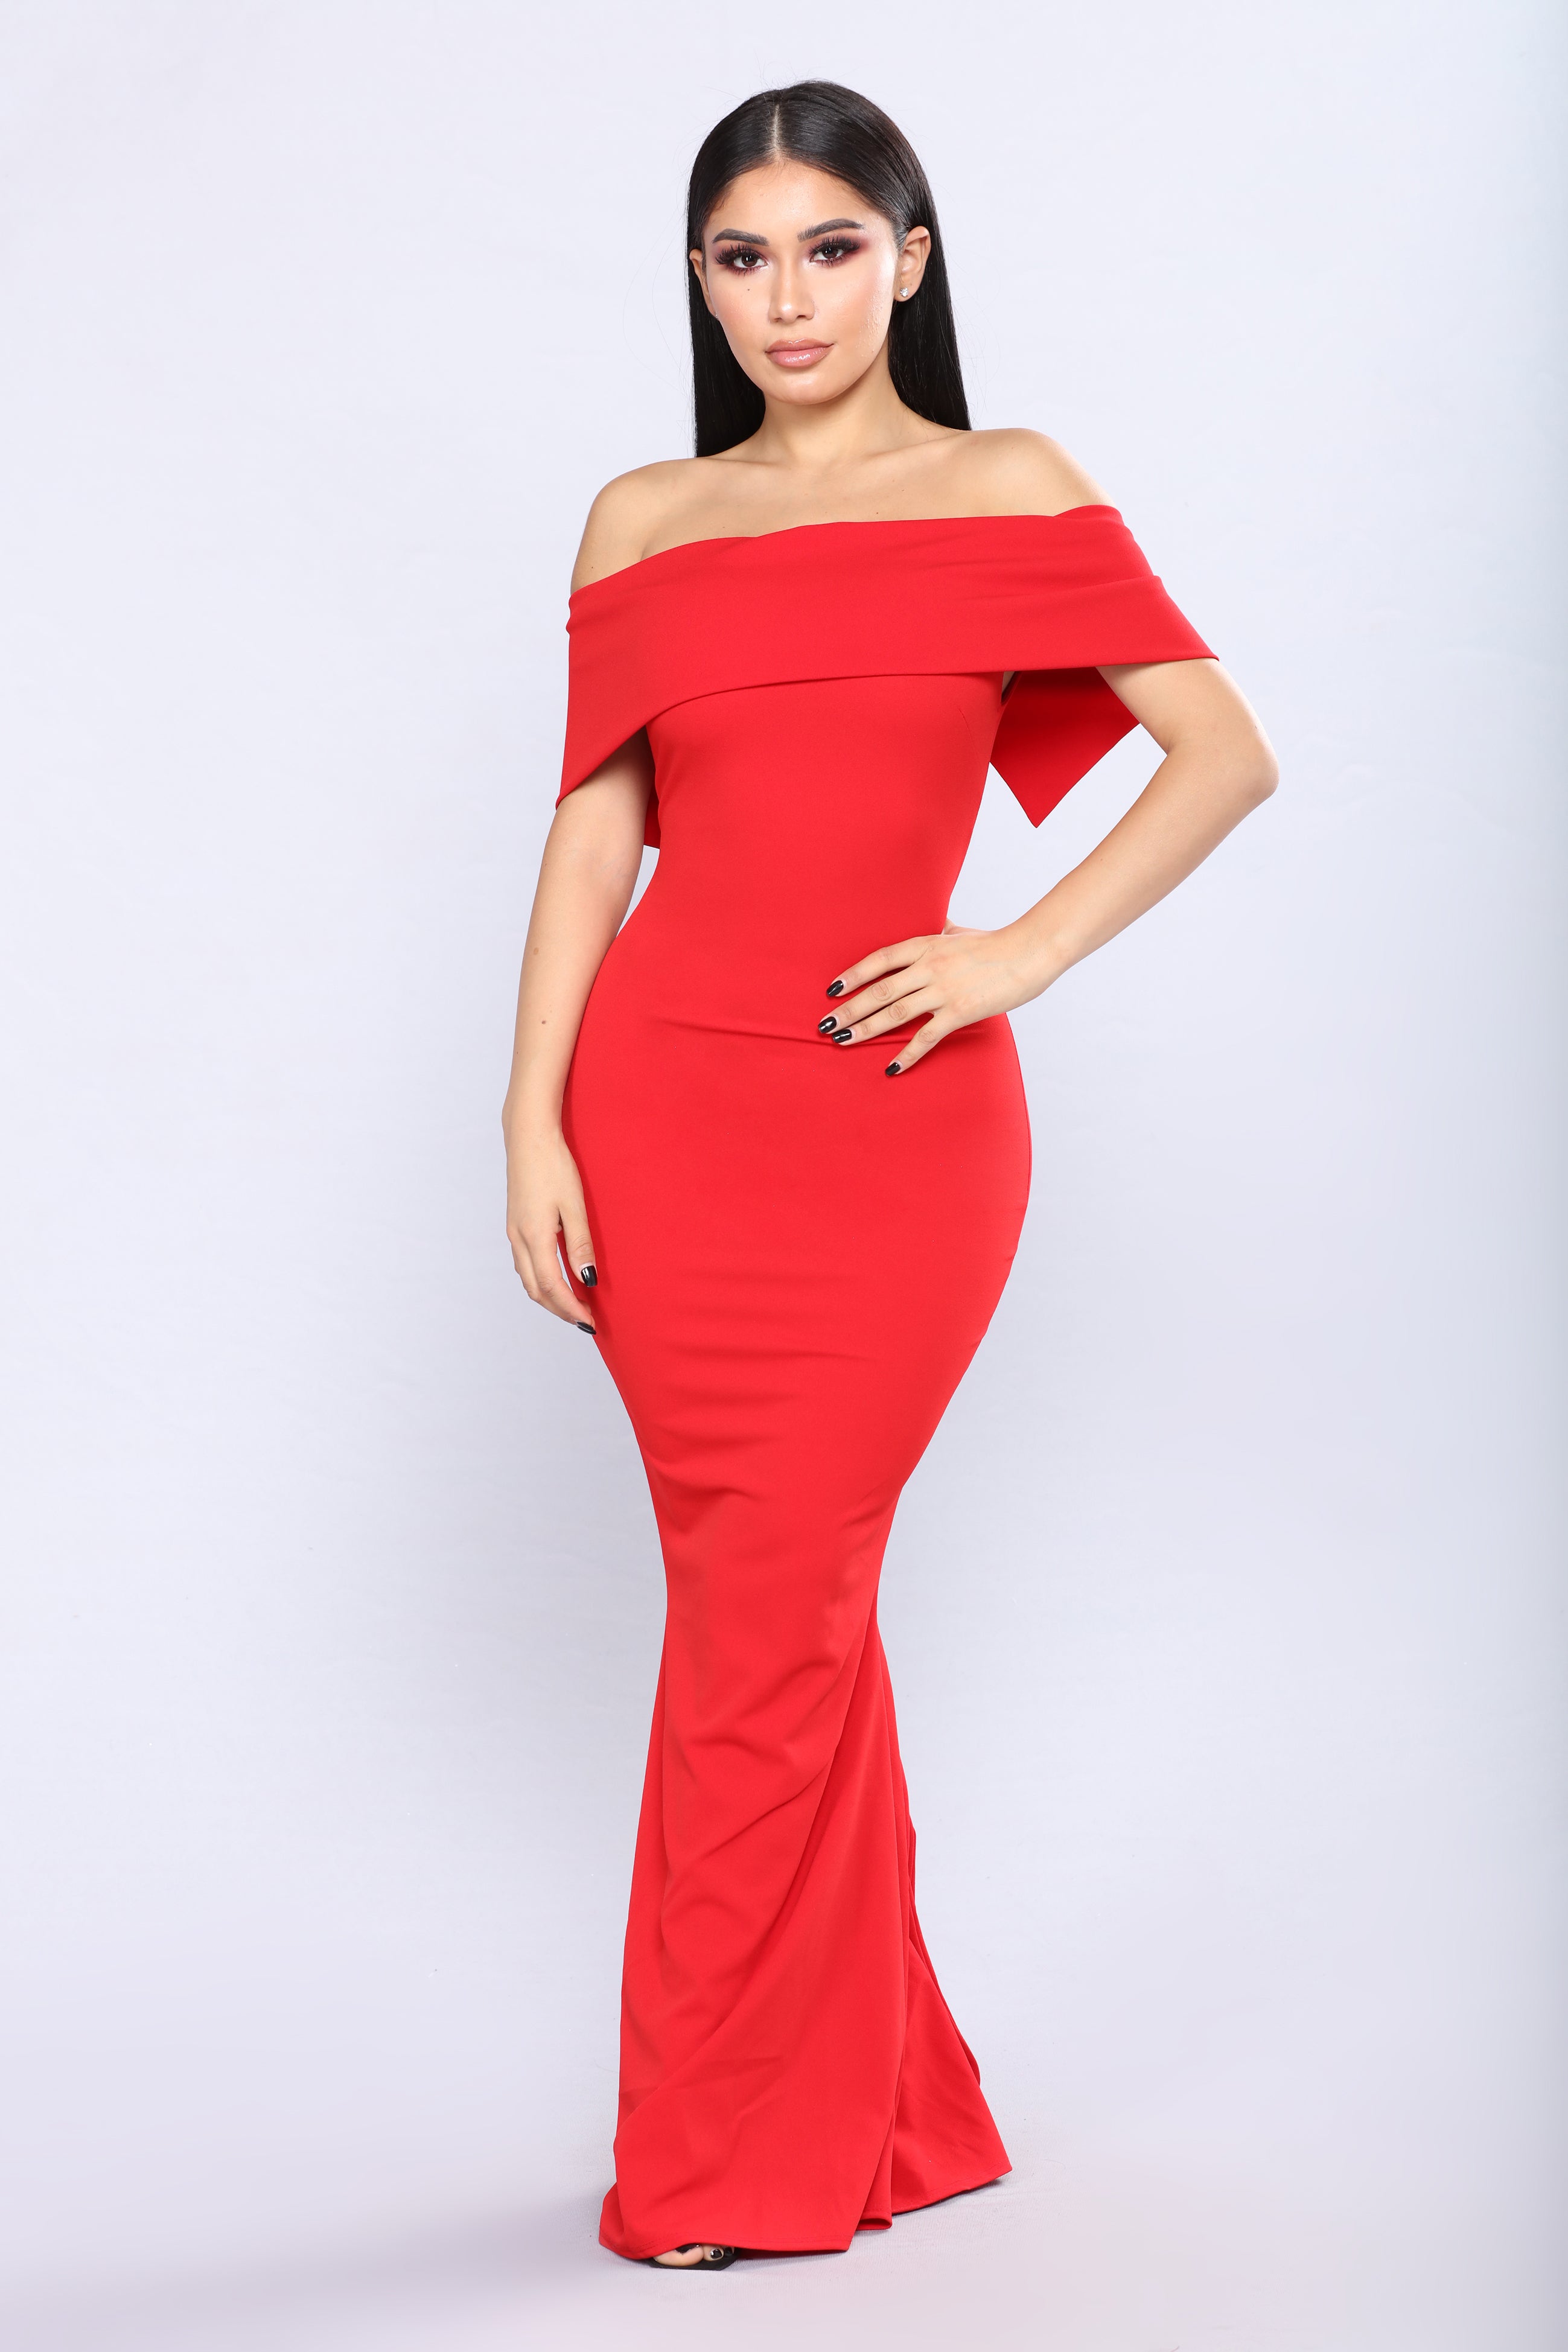 fashion nova dress red